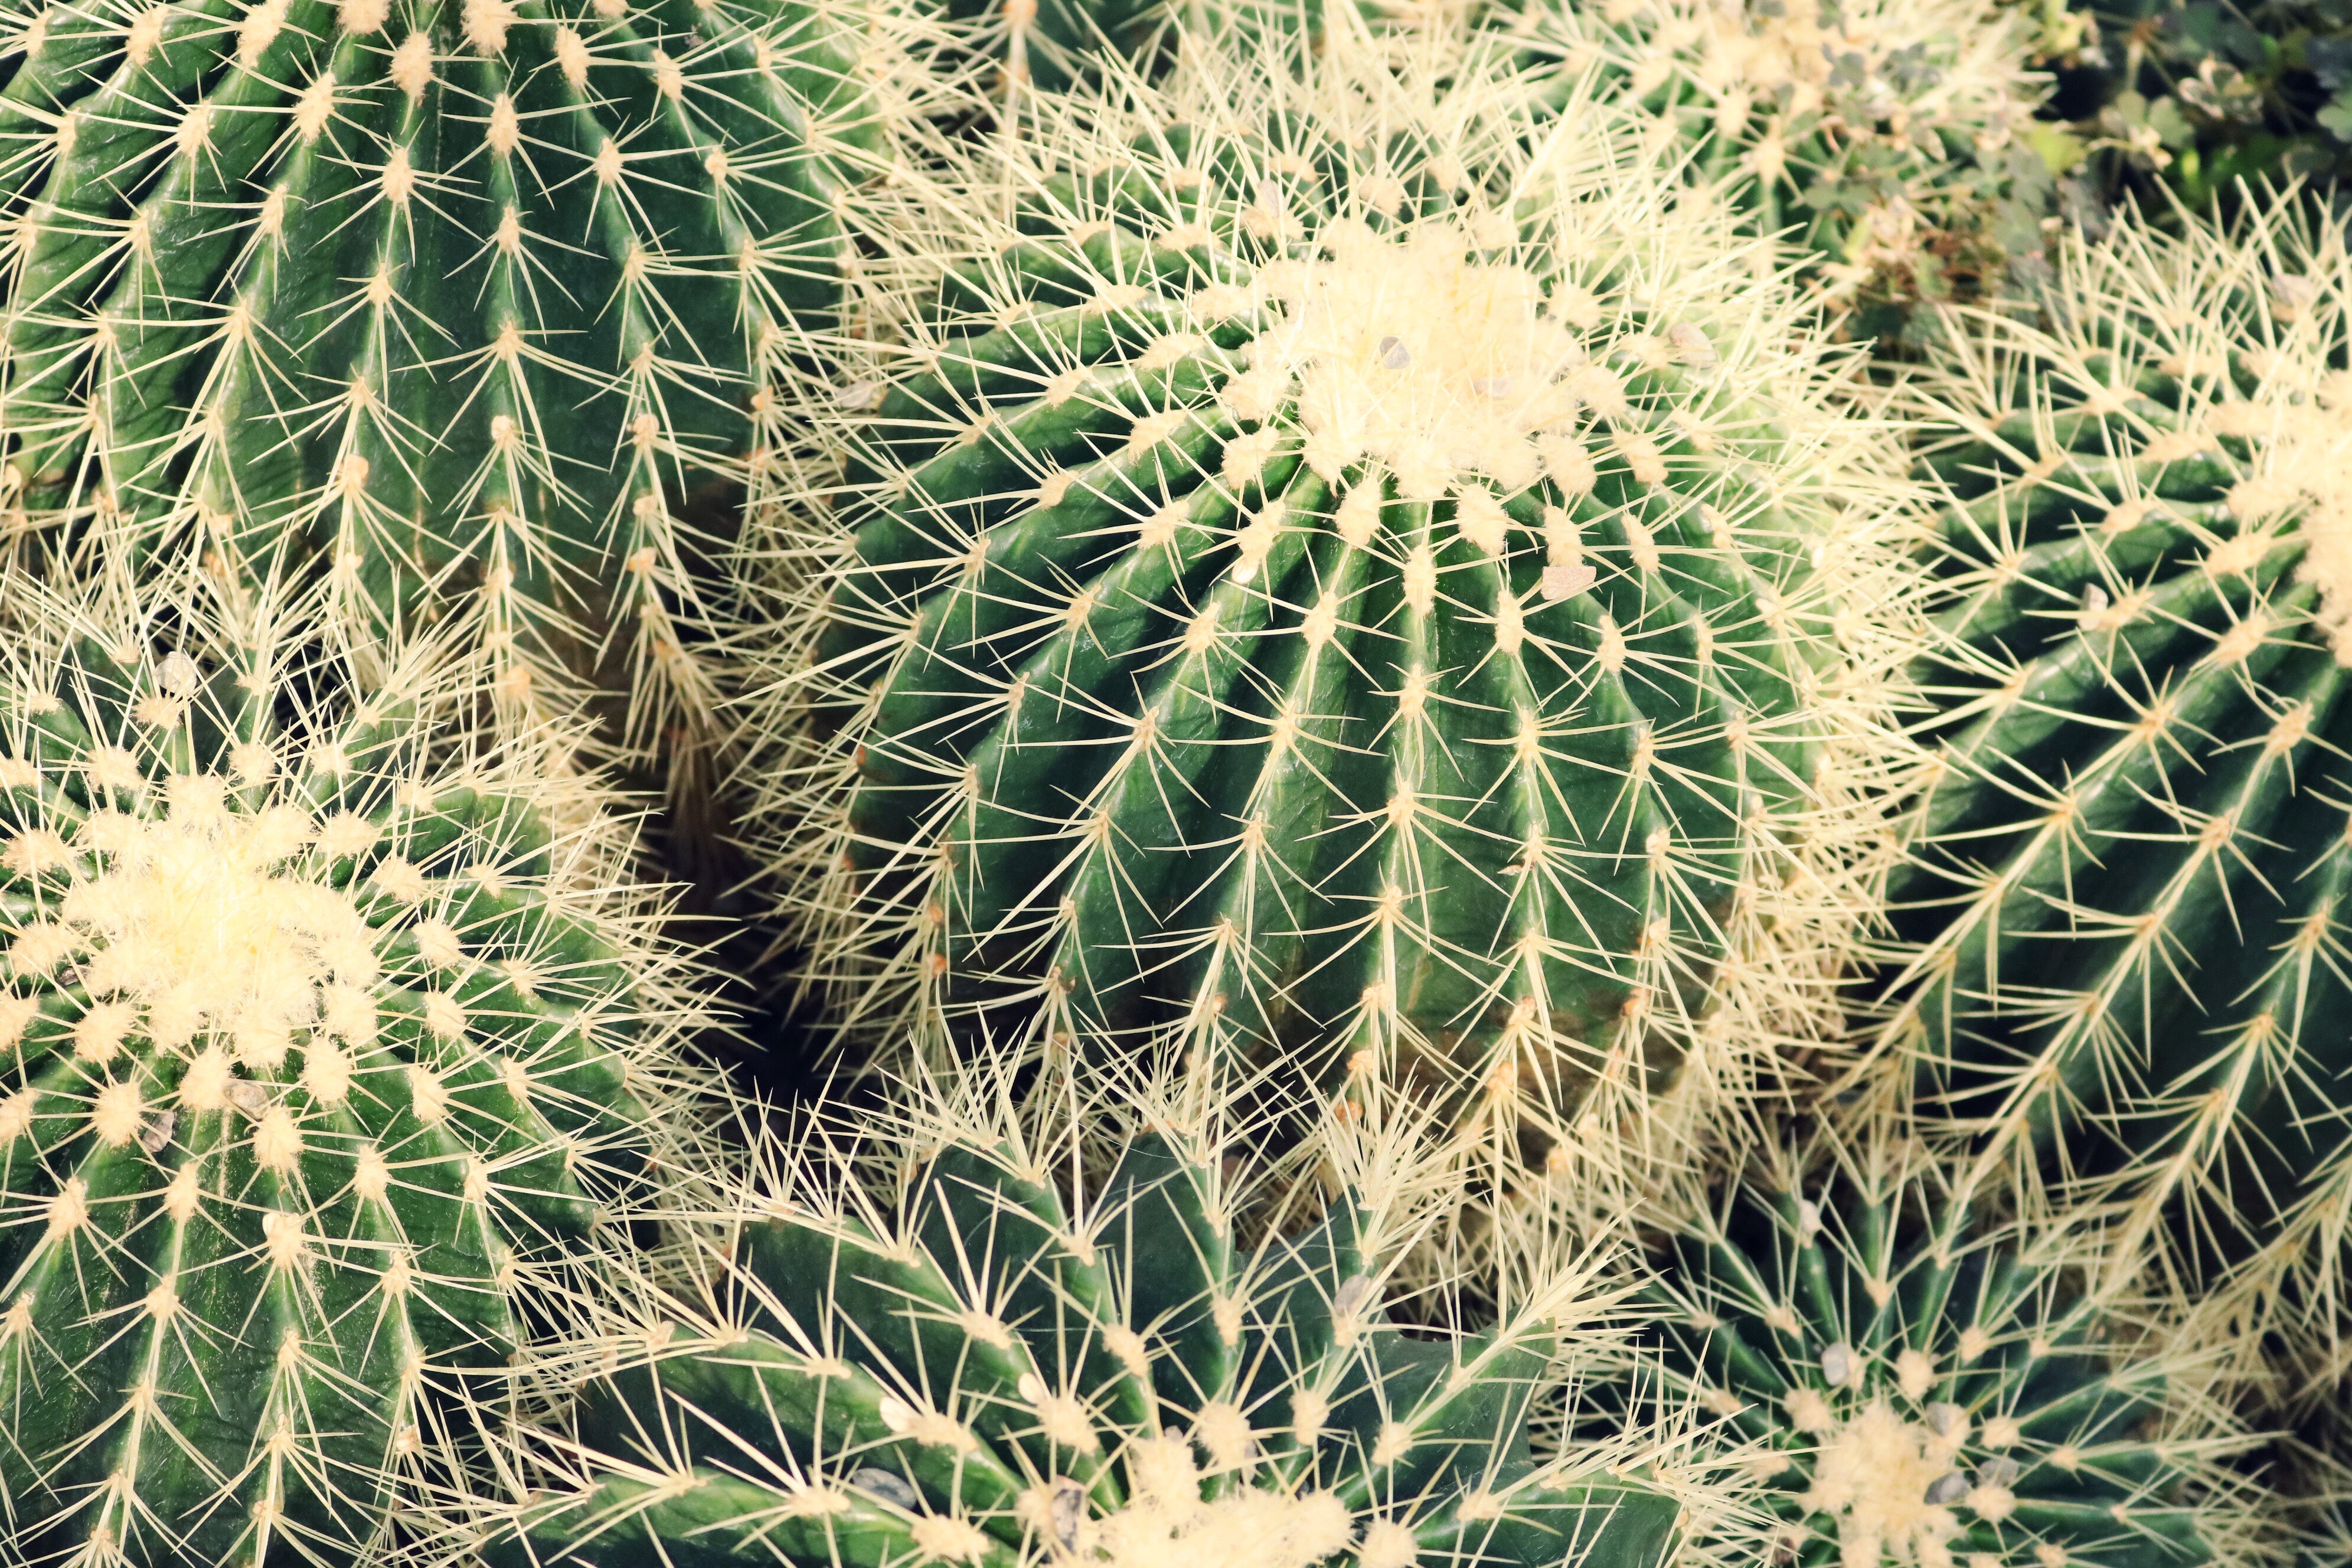 Closeup photo of cactus plants